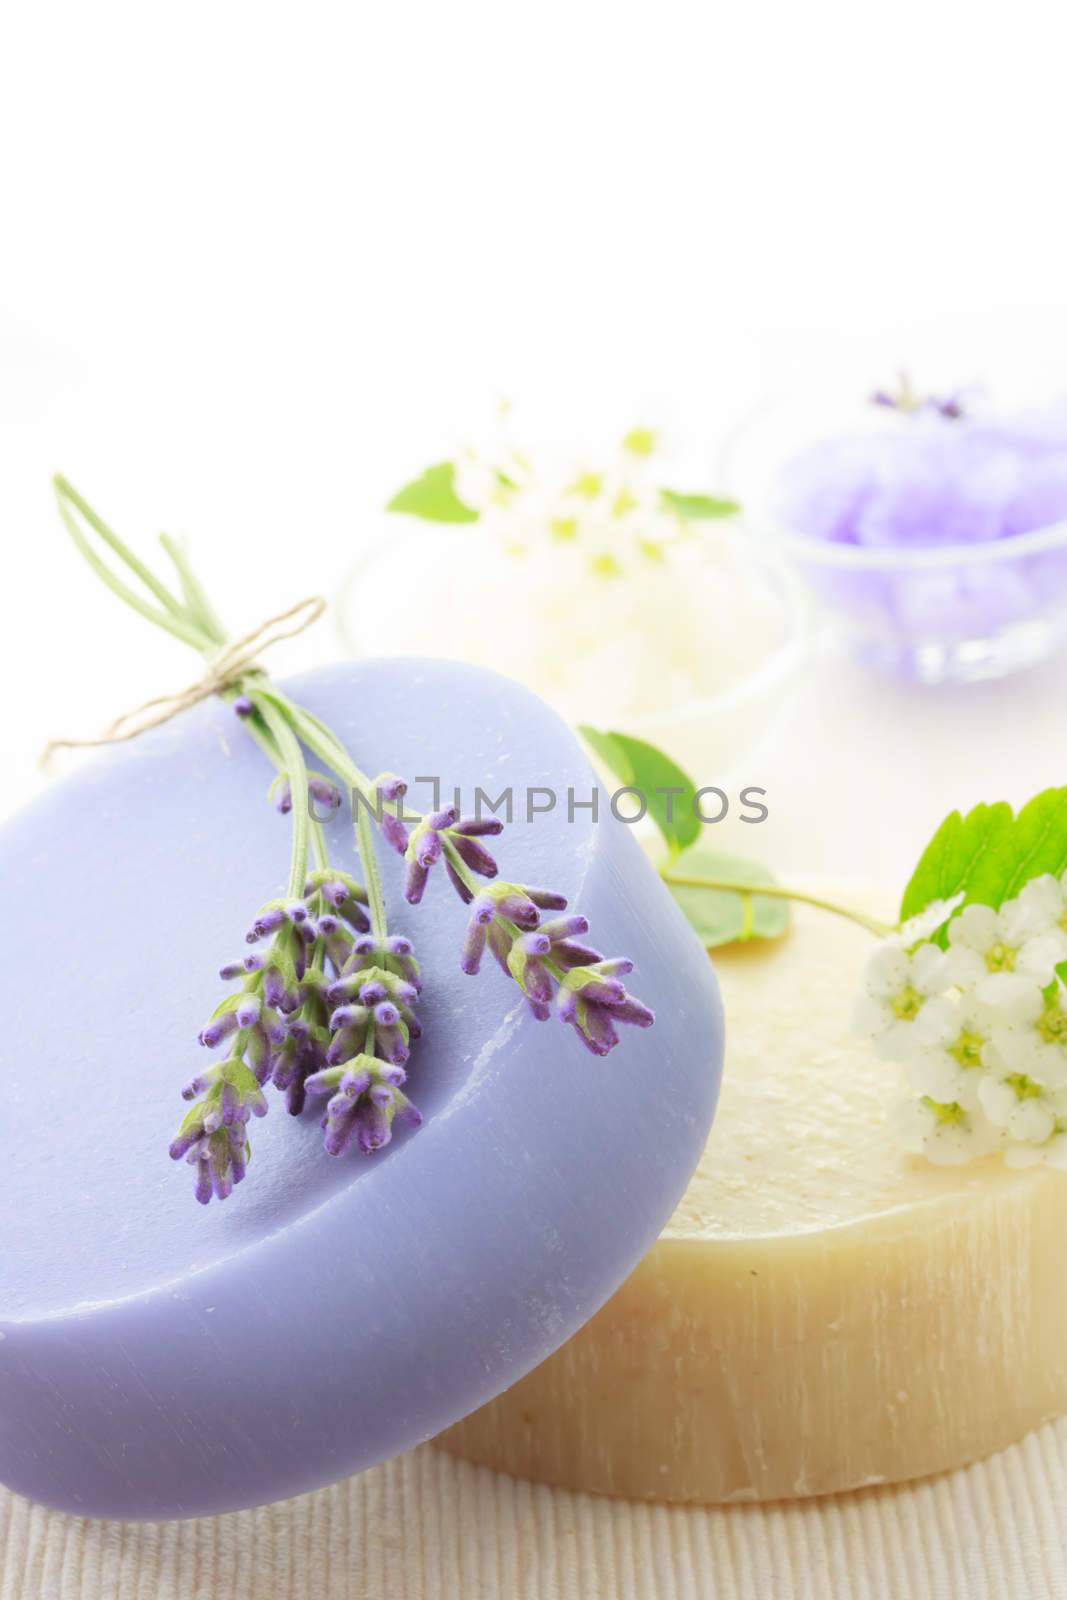 Handmade soap with fresh lavenders, white flowers and bath salt